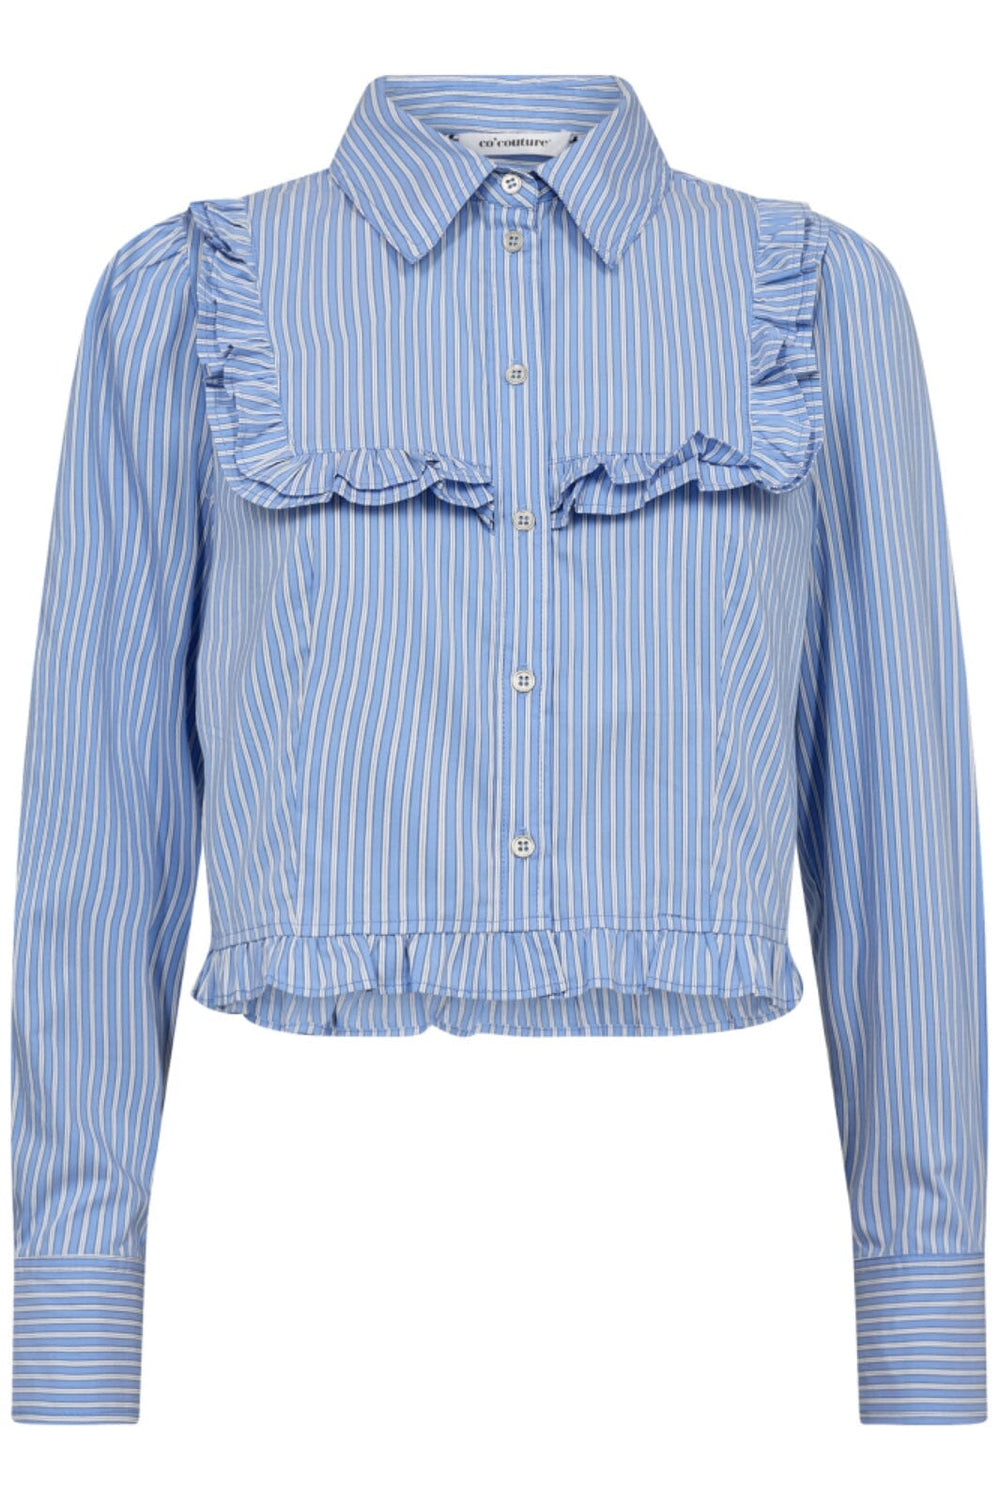 Co´couture - Addiecc Stripe Frill Shirt 35545 - 23 Pale Blue Skjorter 